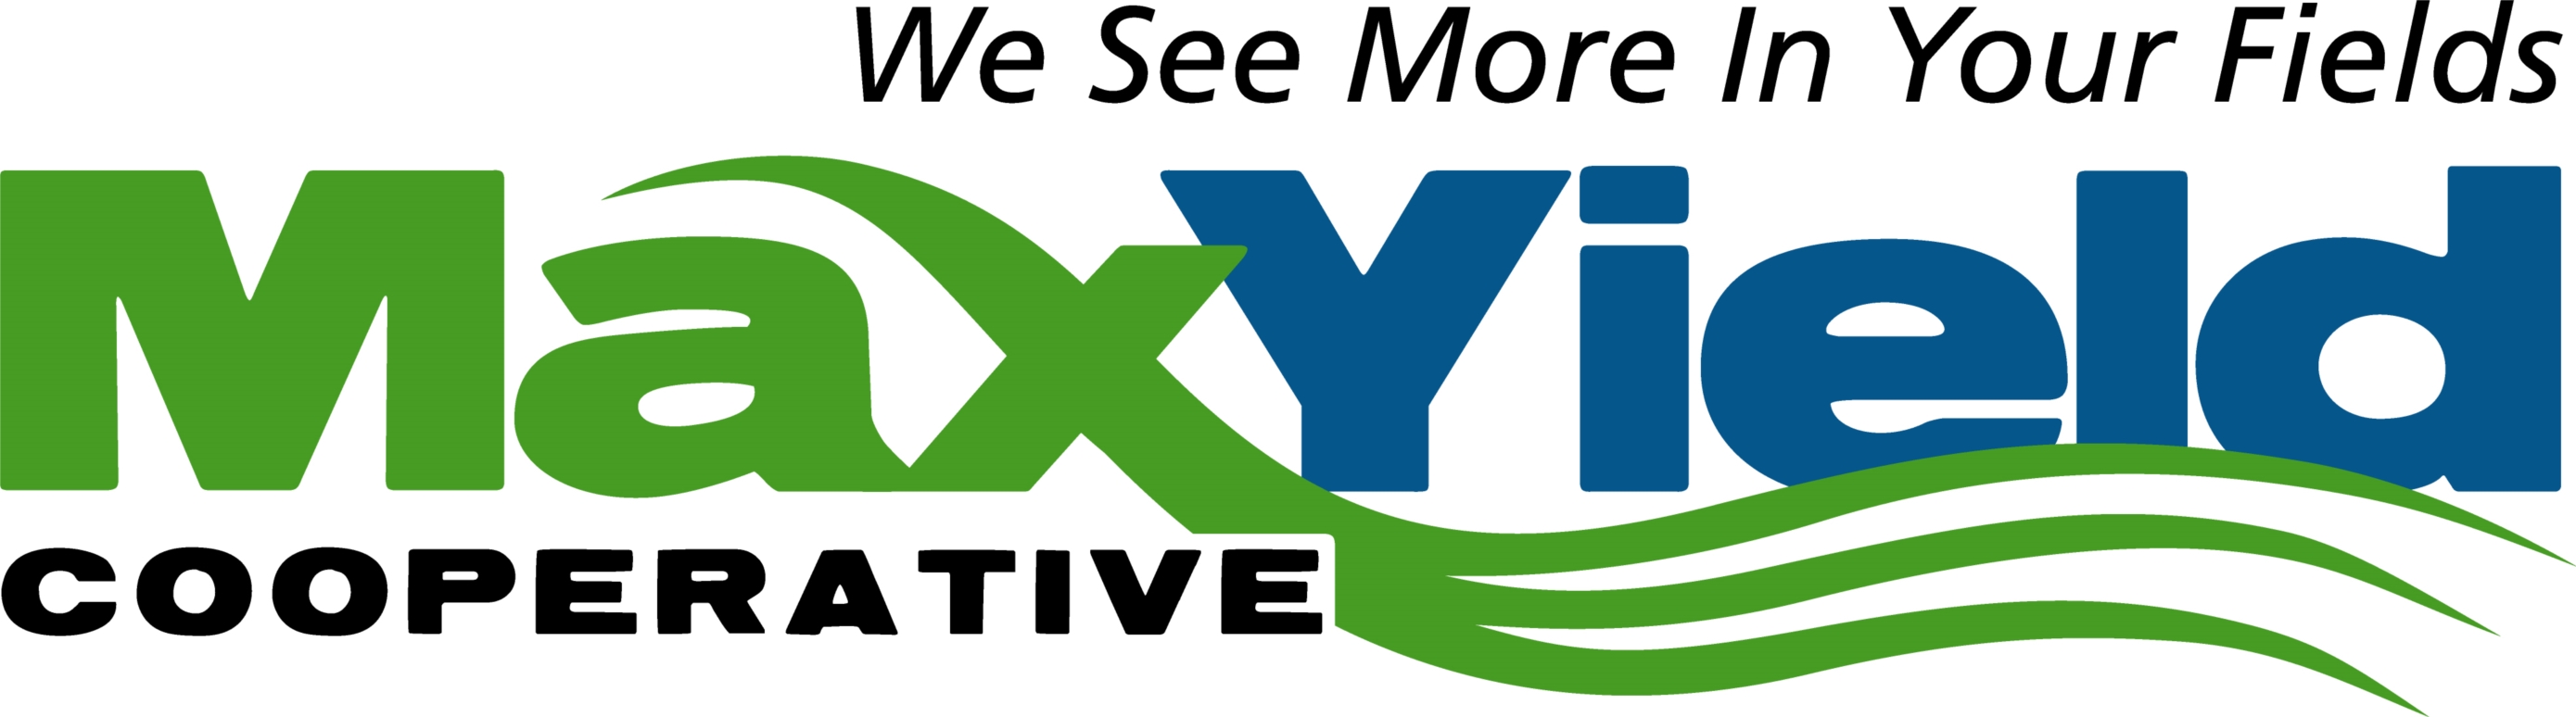 MaxYield Cooperative logo